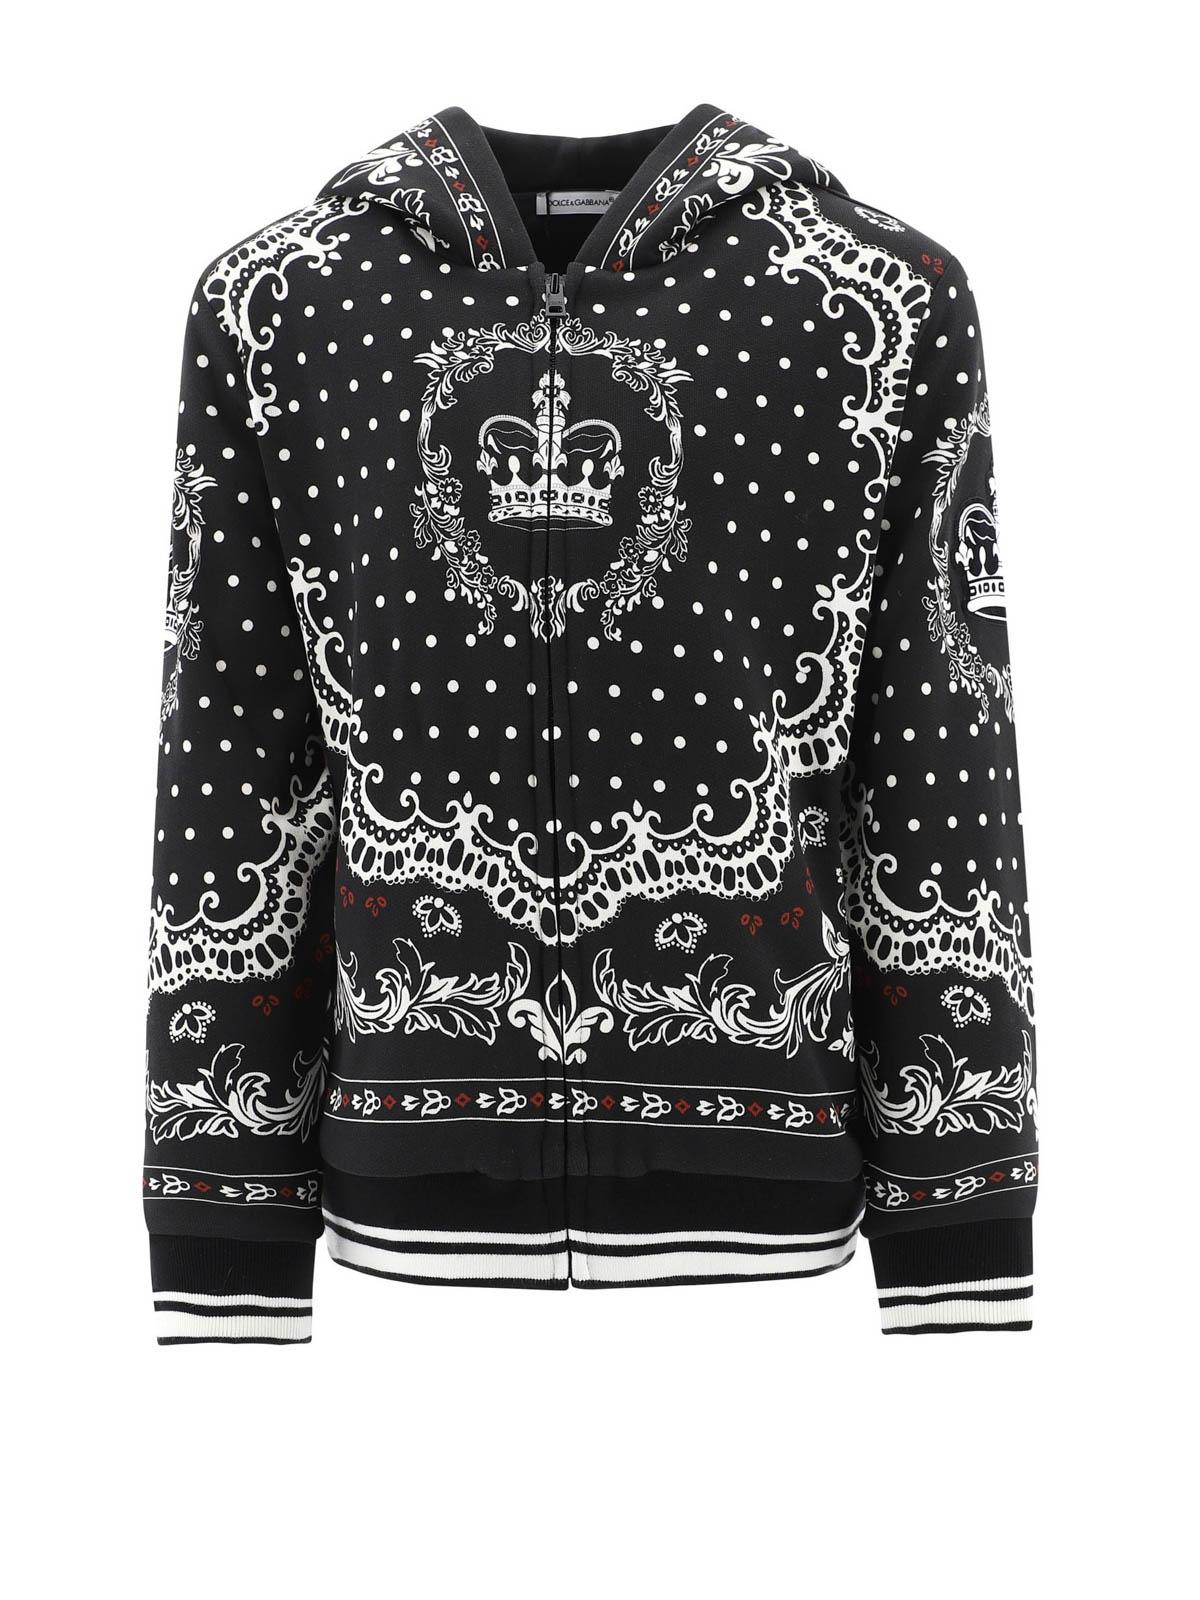 Dolce & Gabbana Bandana Print Cotton Hoodie in Black - Lyst